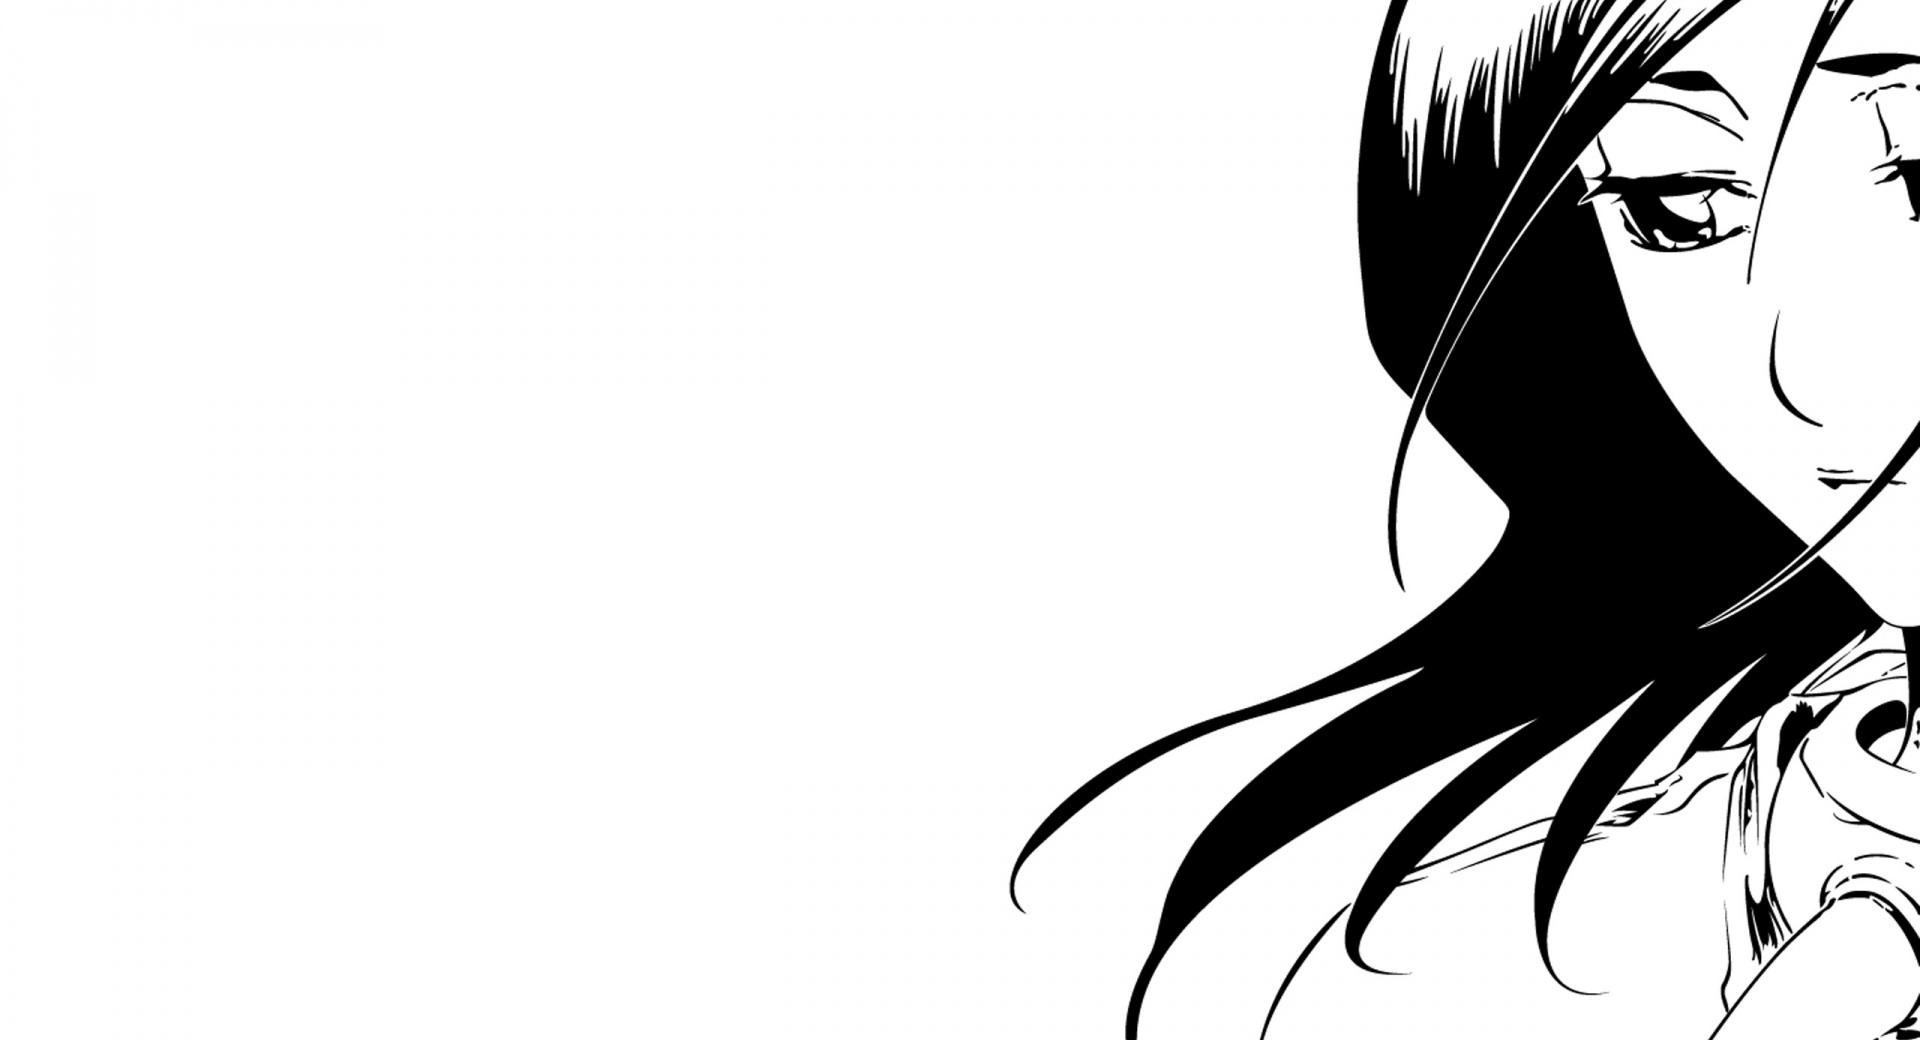 Melancholy Girl Manga at 2048 x 2048 iPad size wallpapers HD quality